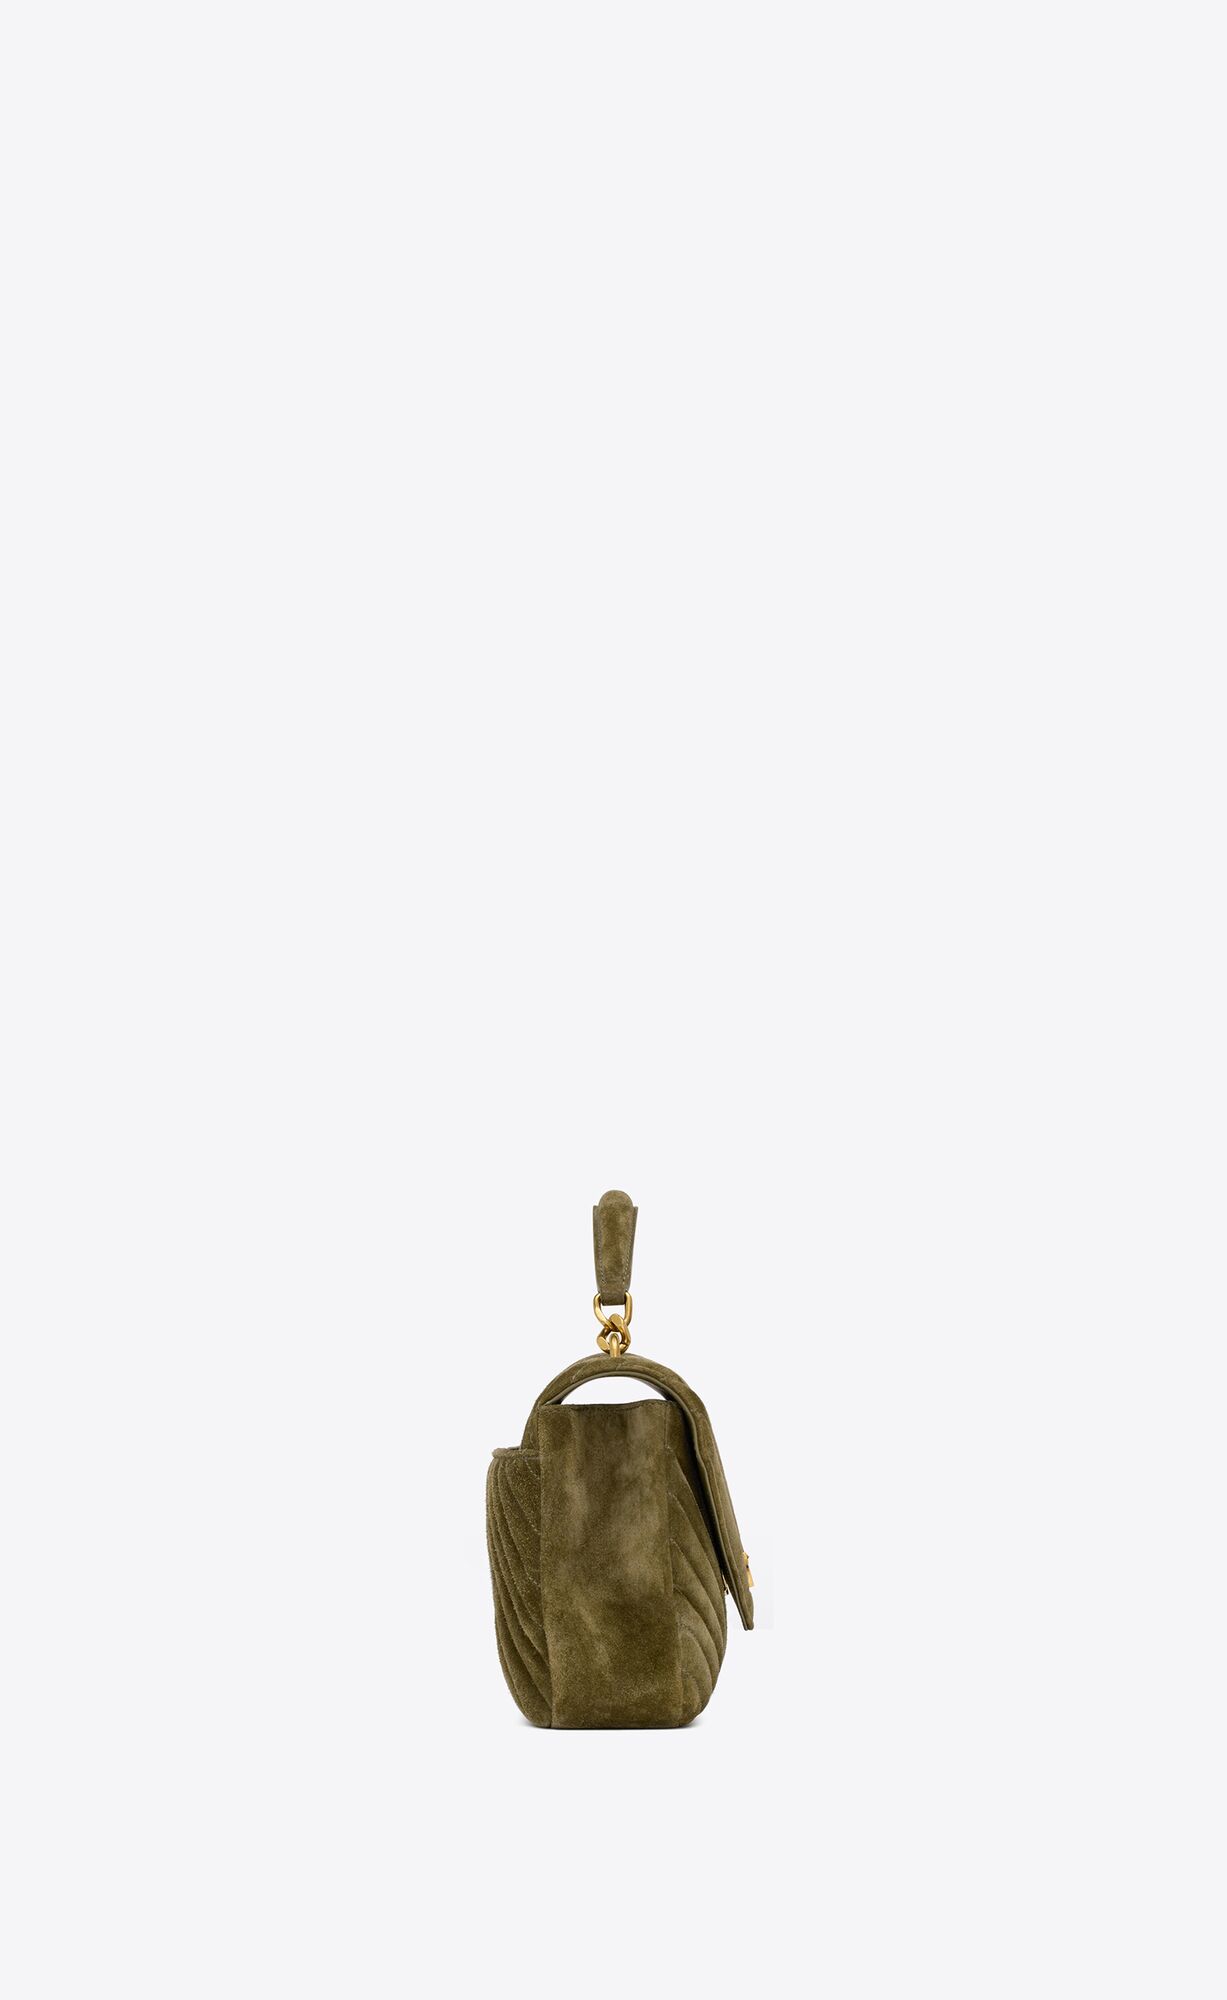 Medium Pouch Bag Loden Green Leather Shoulder Bag Crossbody 